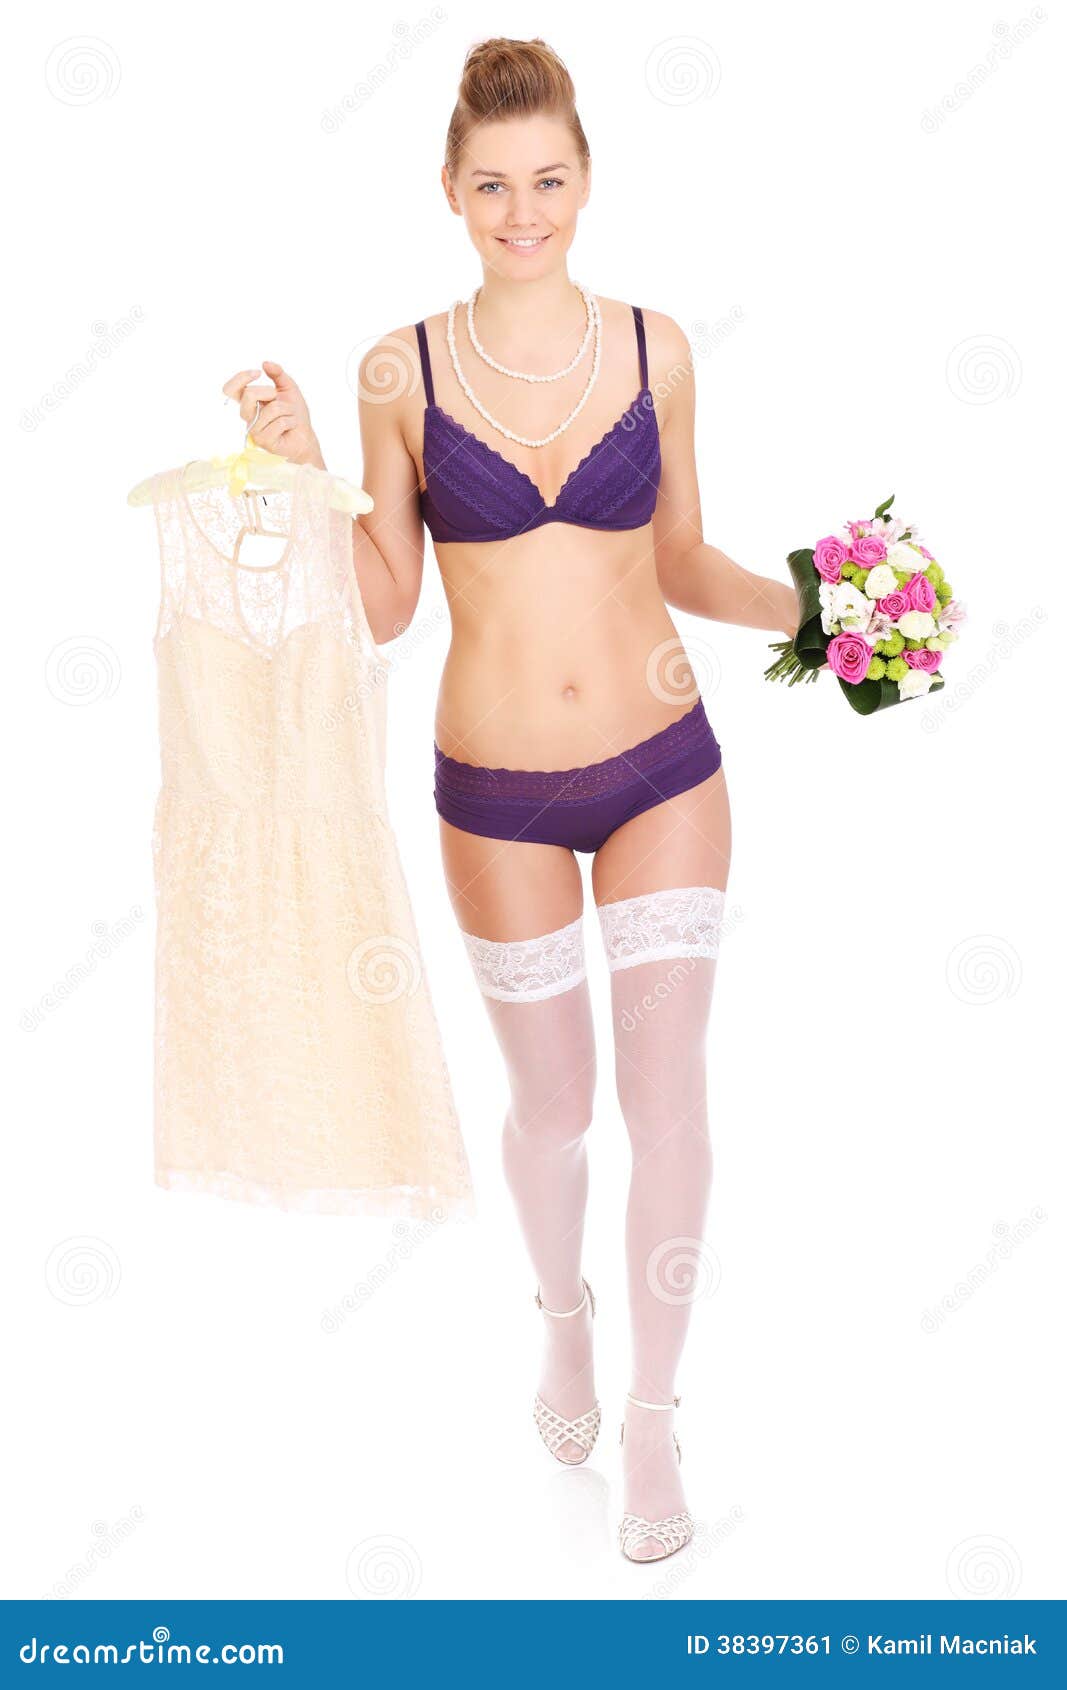 https://thumbs.dreamstime.com/z/bride-underwear-38397361.jpg